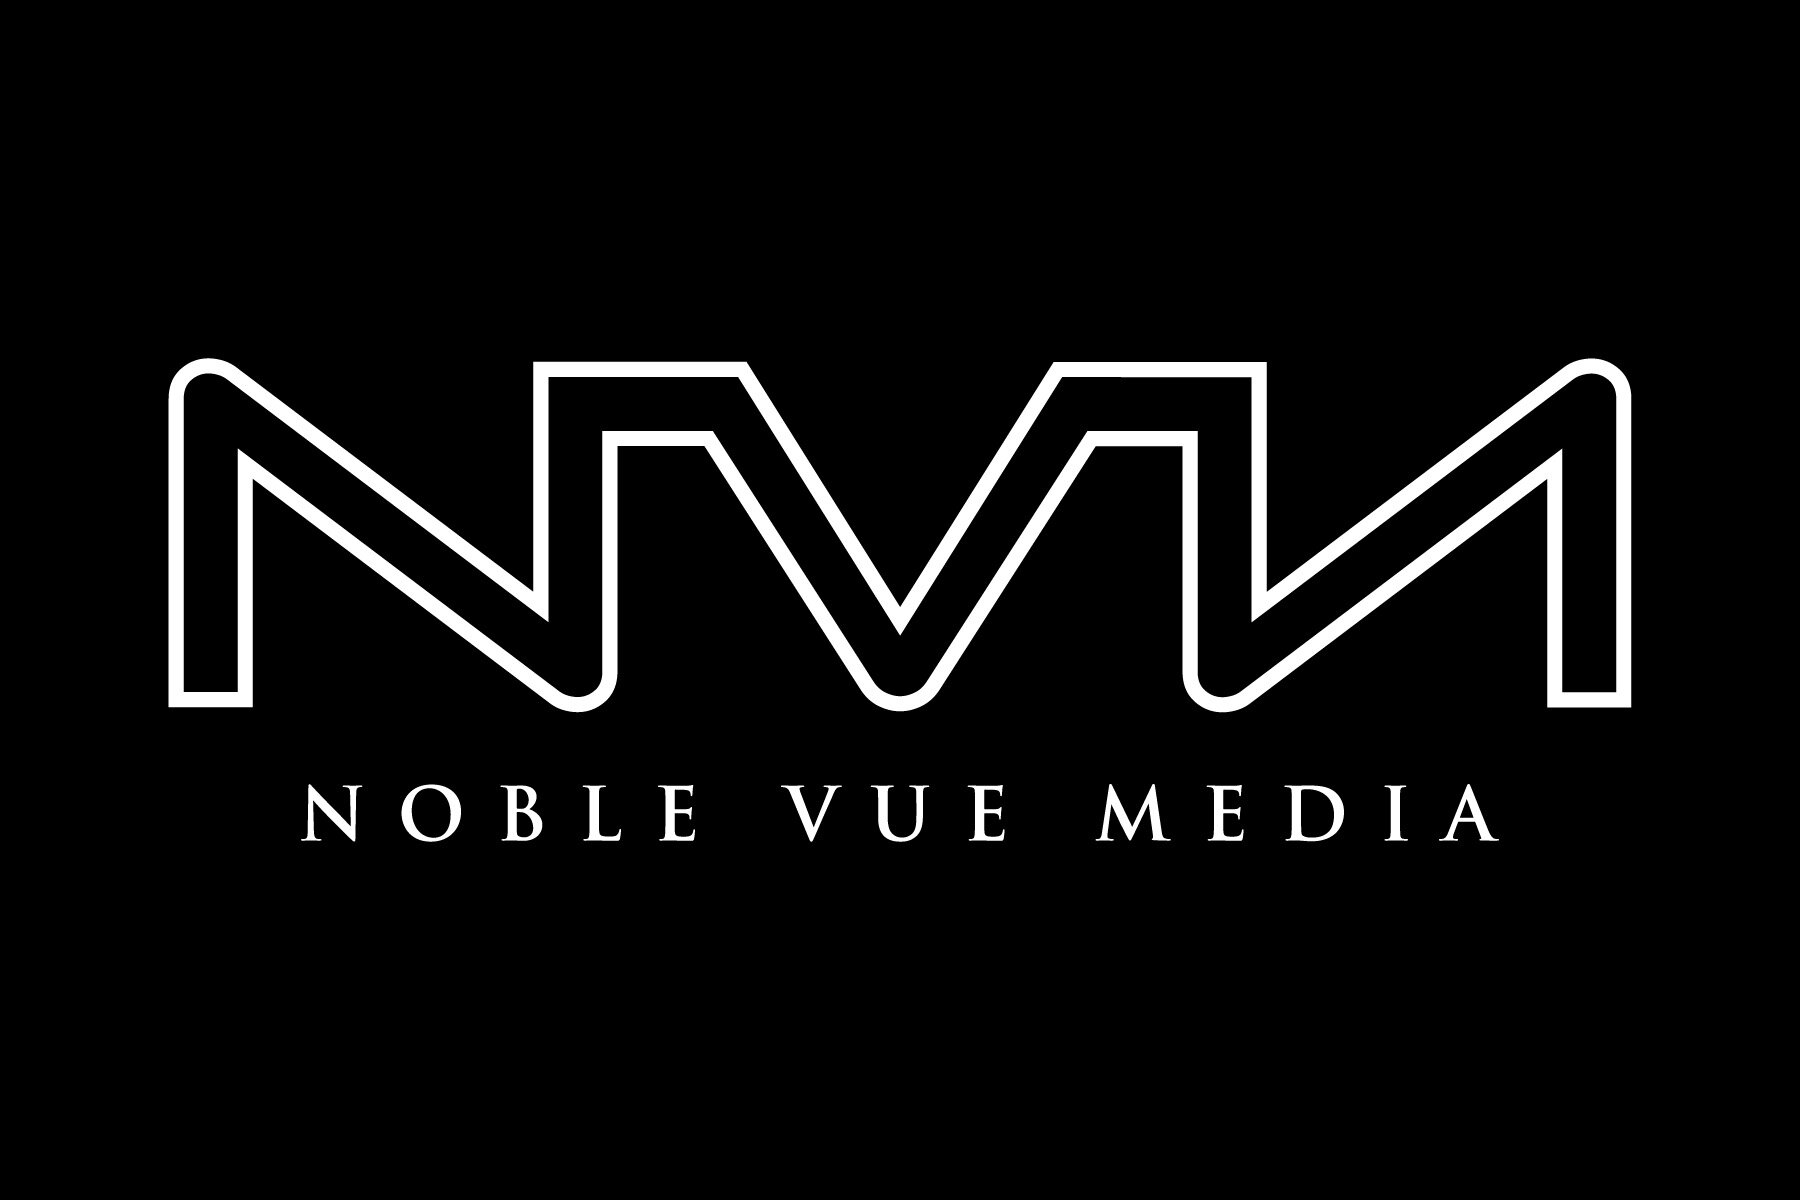 Noble Vue Media